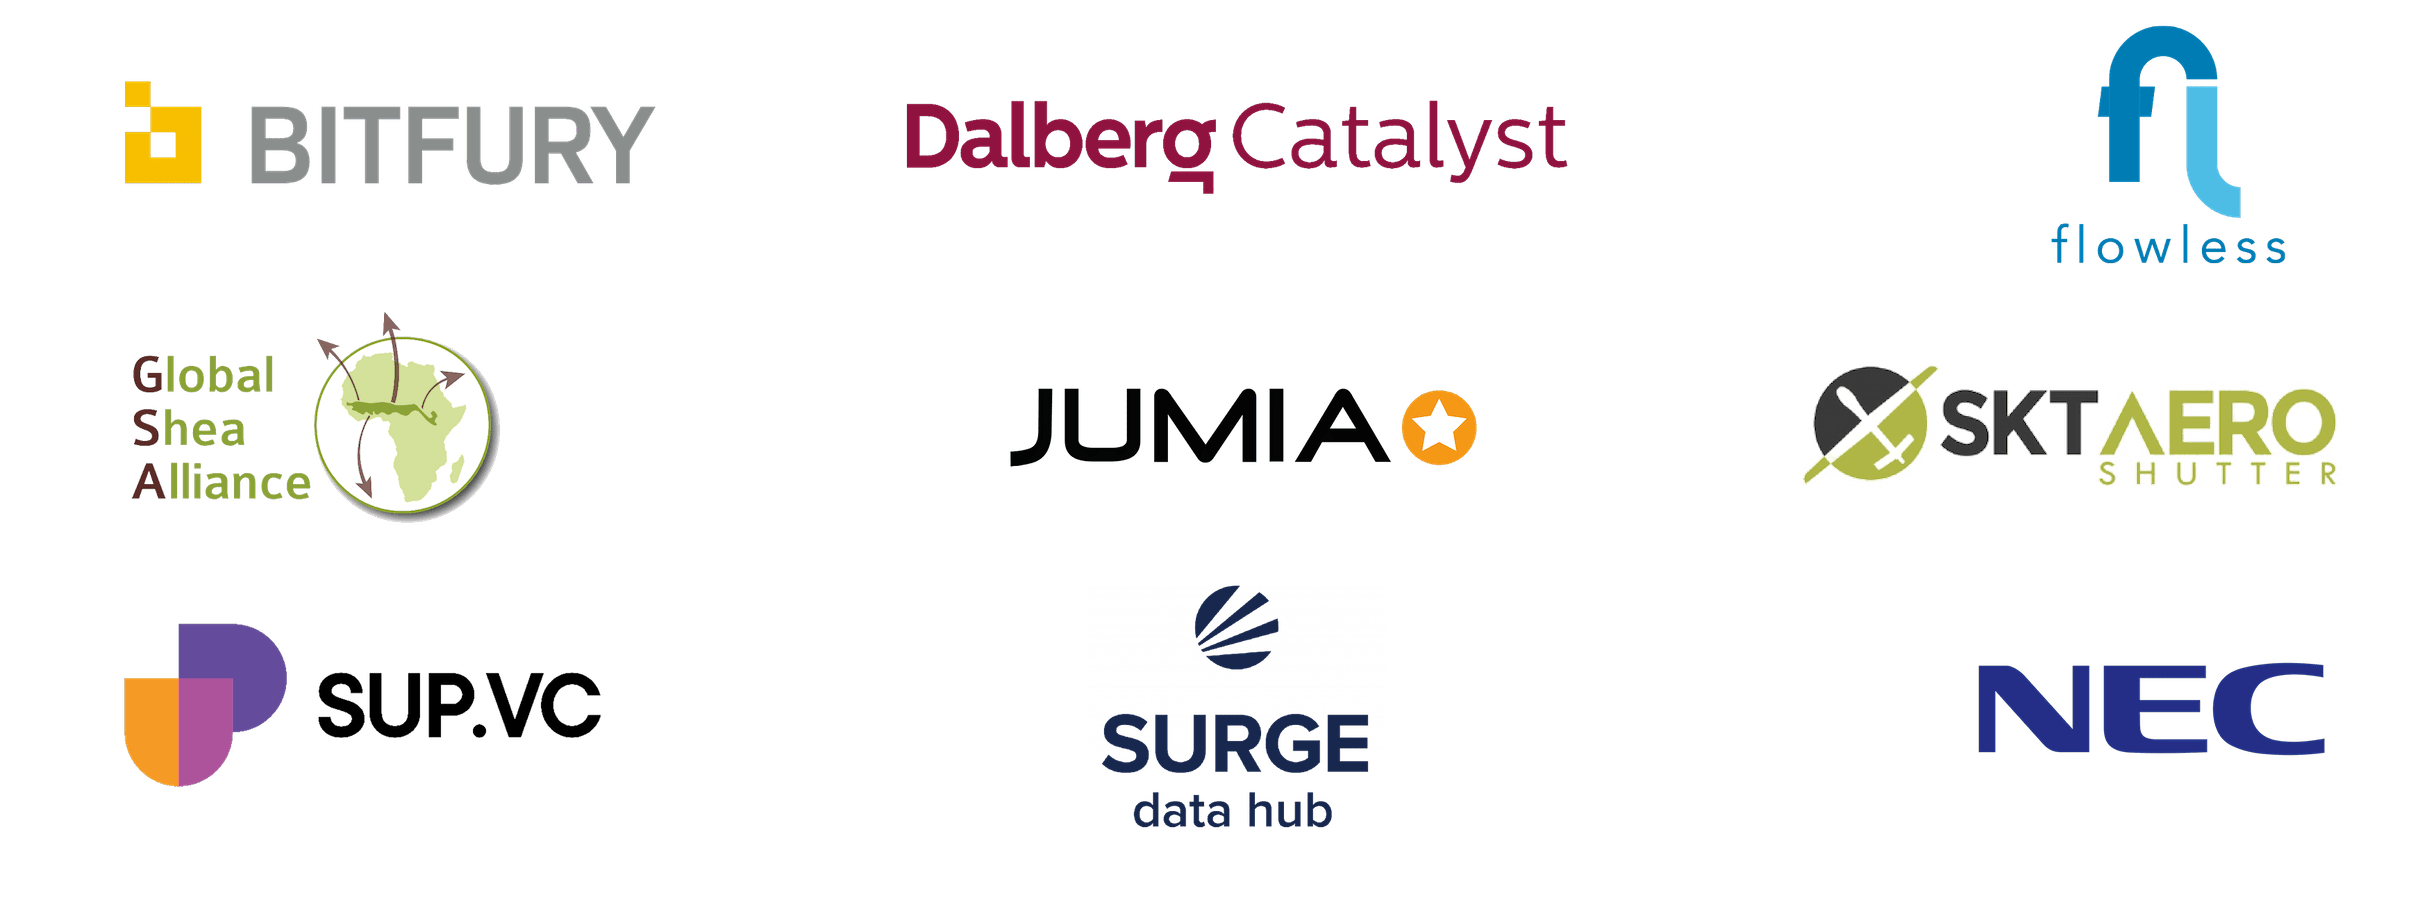 depiction of the following logos: Bitfury, Dalberg Catalyst, FlowLess, Global Shea Alliance, Jumia, NEC, SKT AeroShutter, SUP.VC, Surge Data Hub